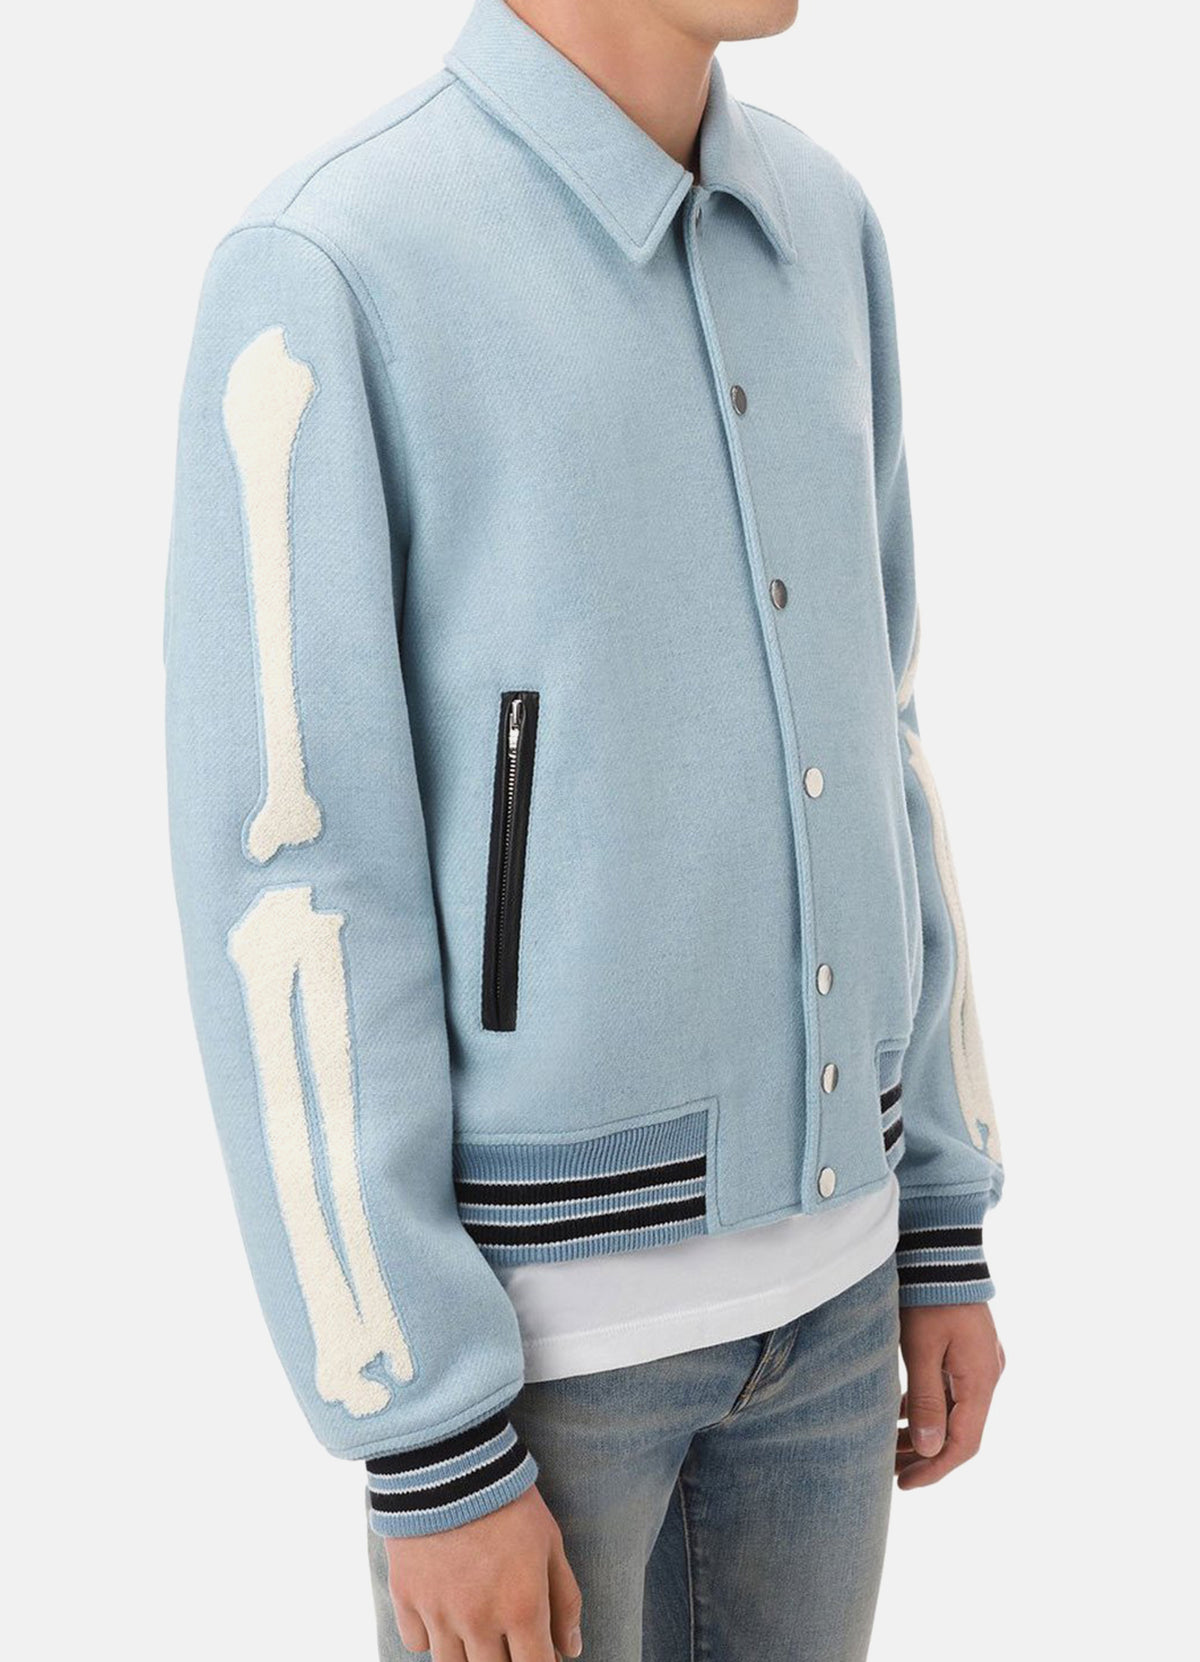 Mens Baby Blue Bone Design Varsity Jacket | Elite Jacket